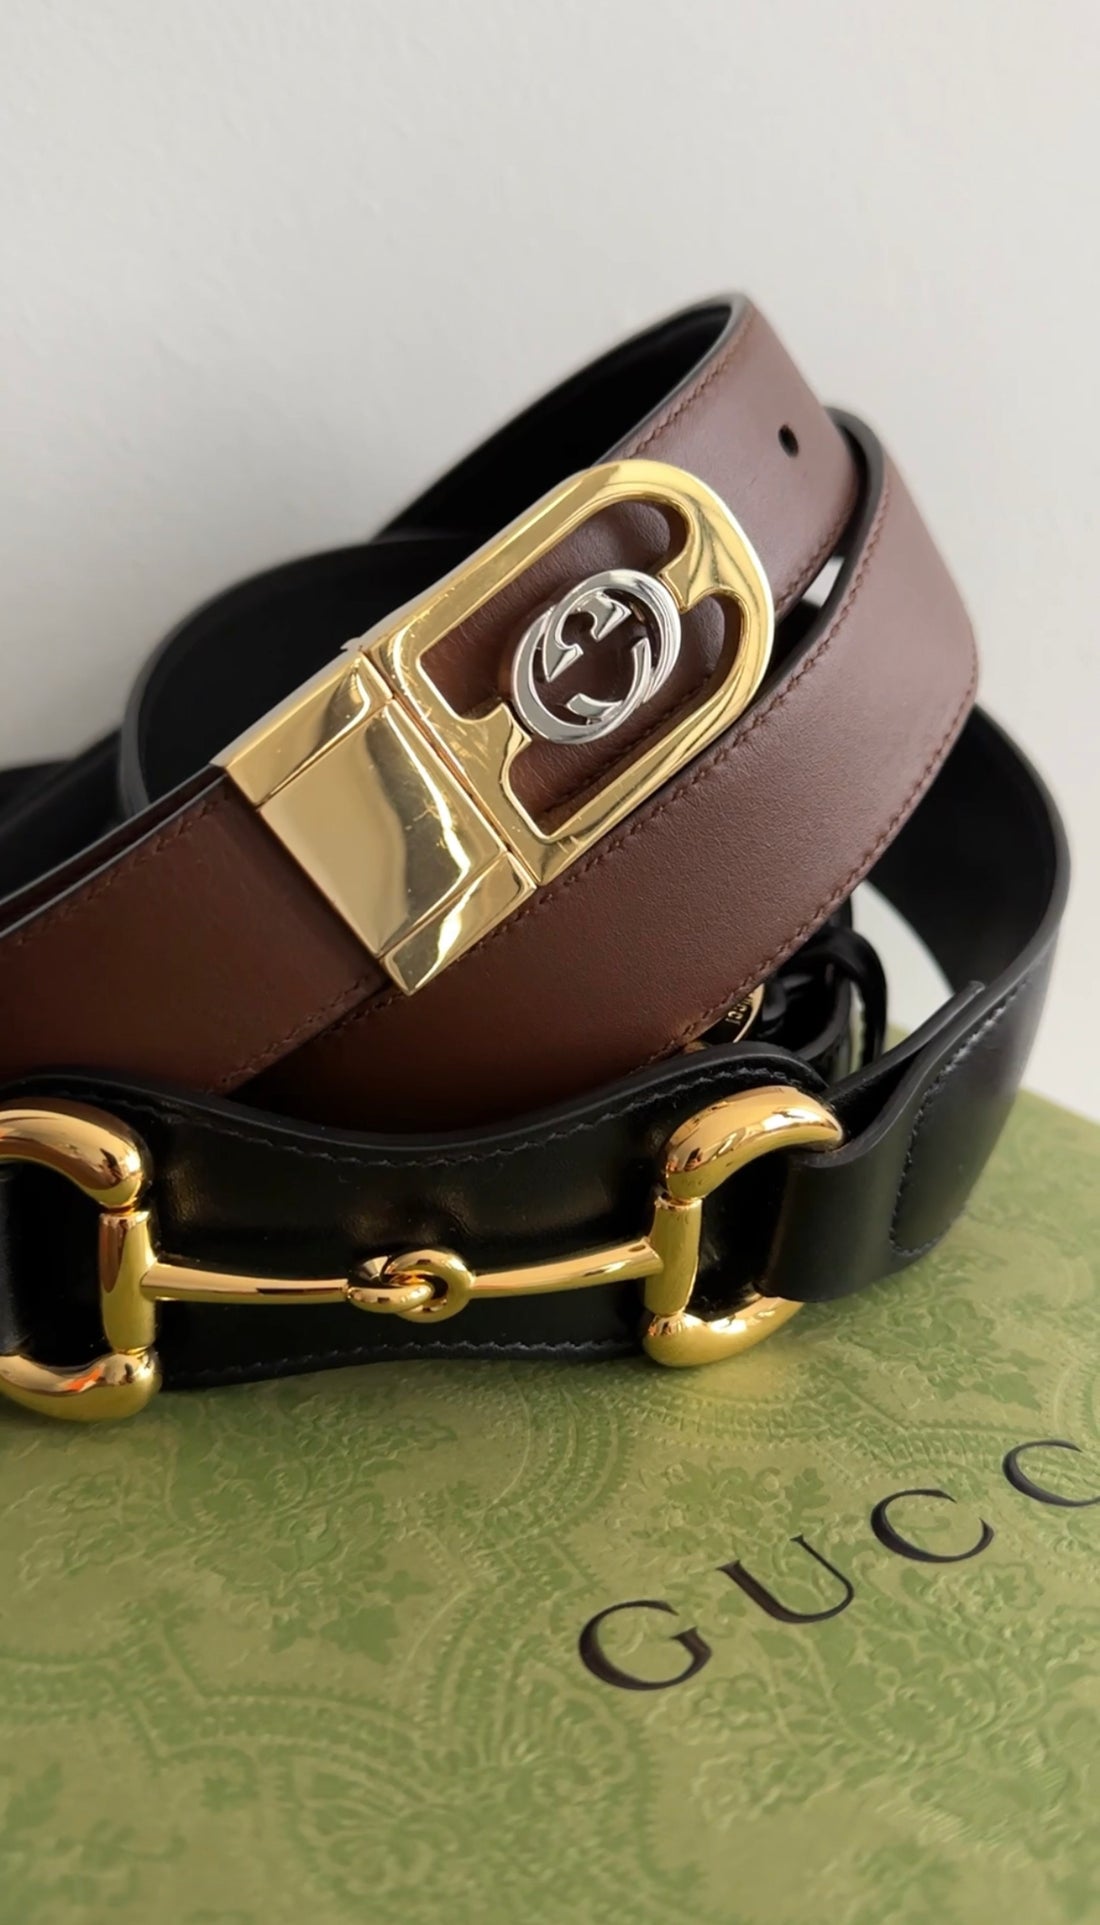 Gucci 1955 Black Leather Horsebit Belt - 85 / 34